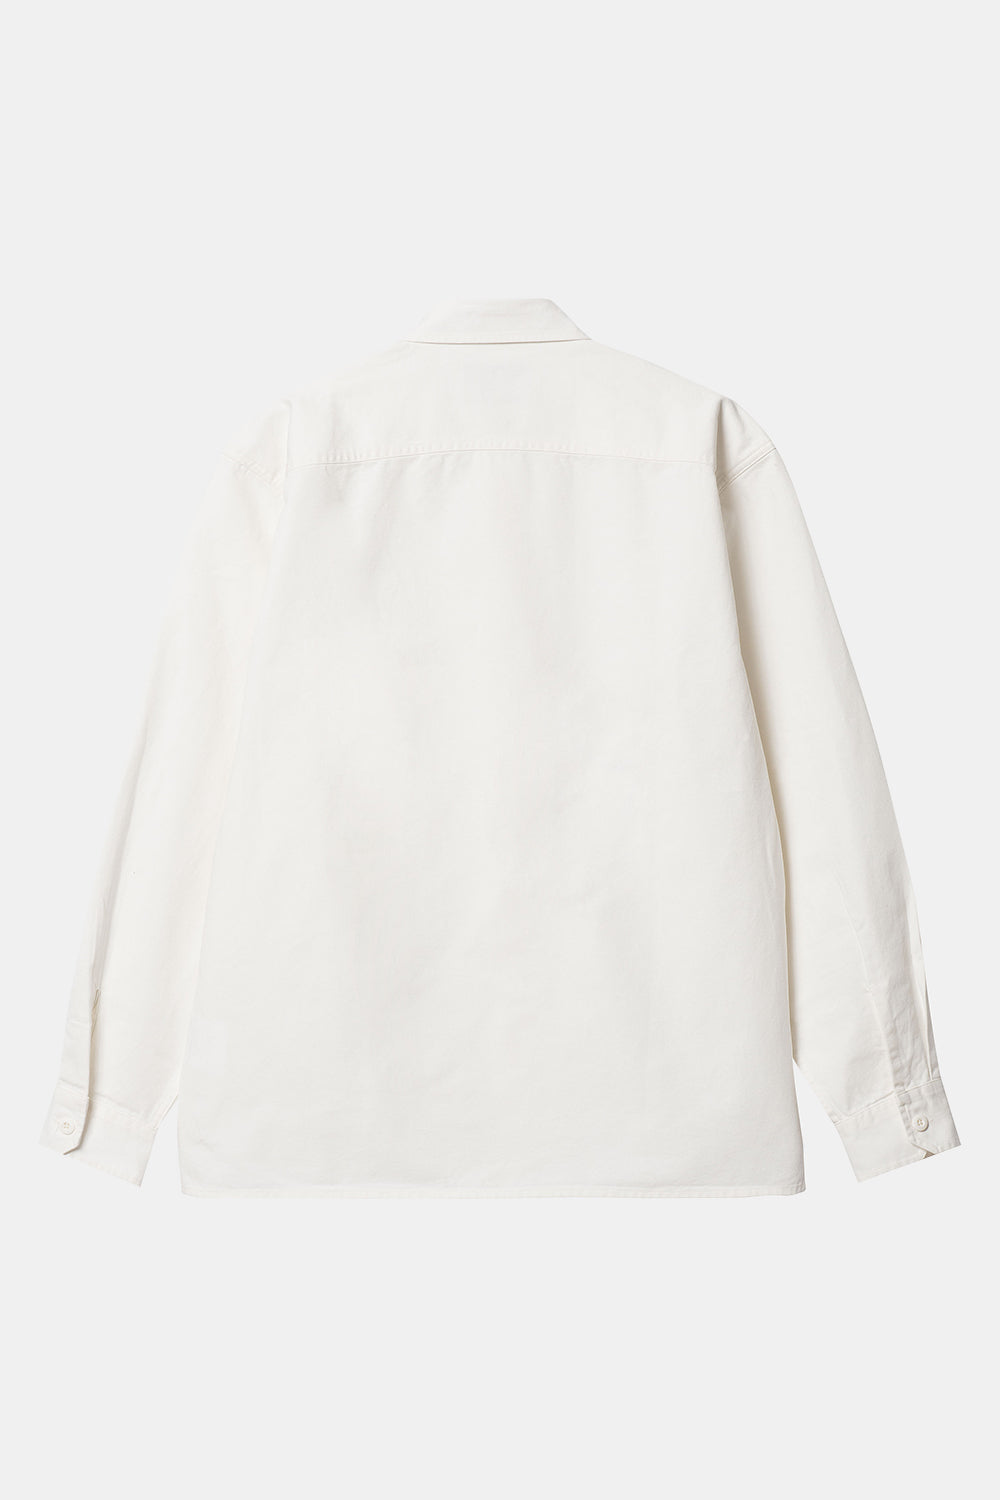 Carhartt WIP Reno Shirt Jacket (Off White)